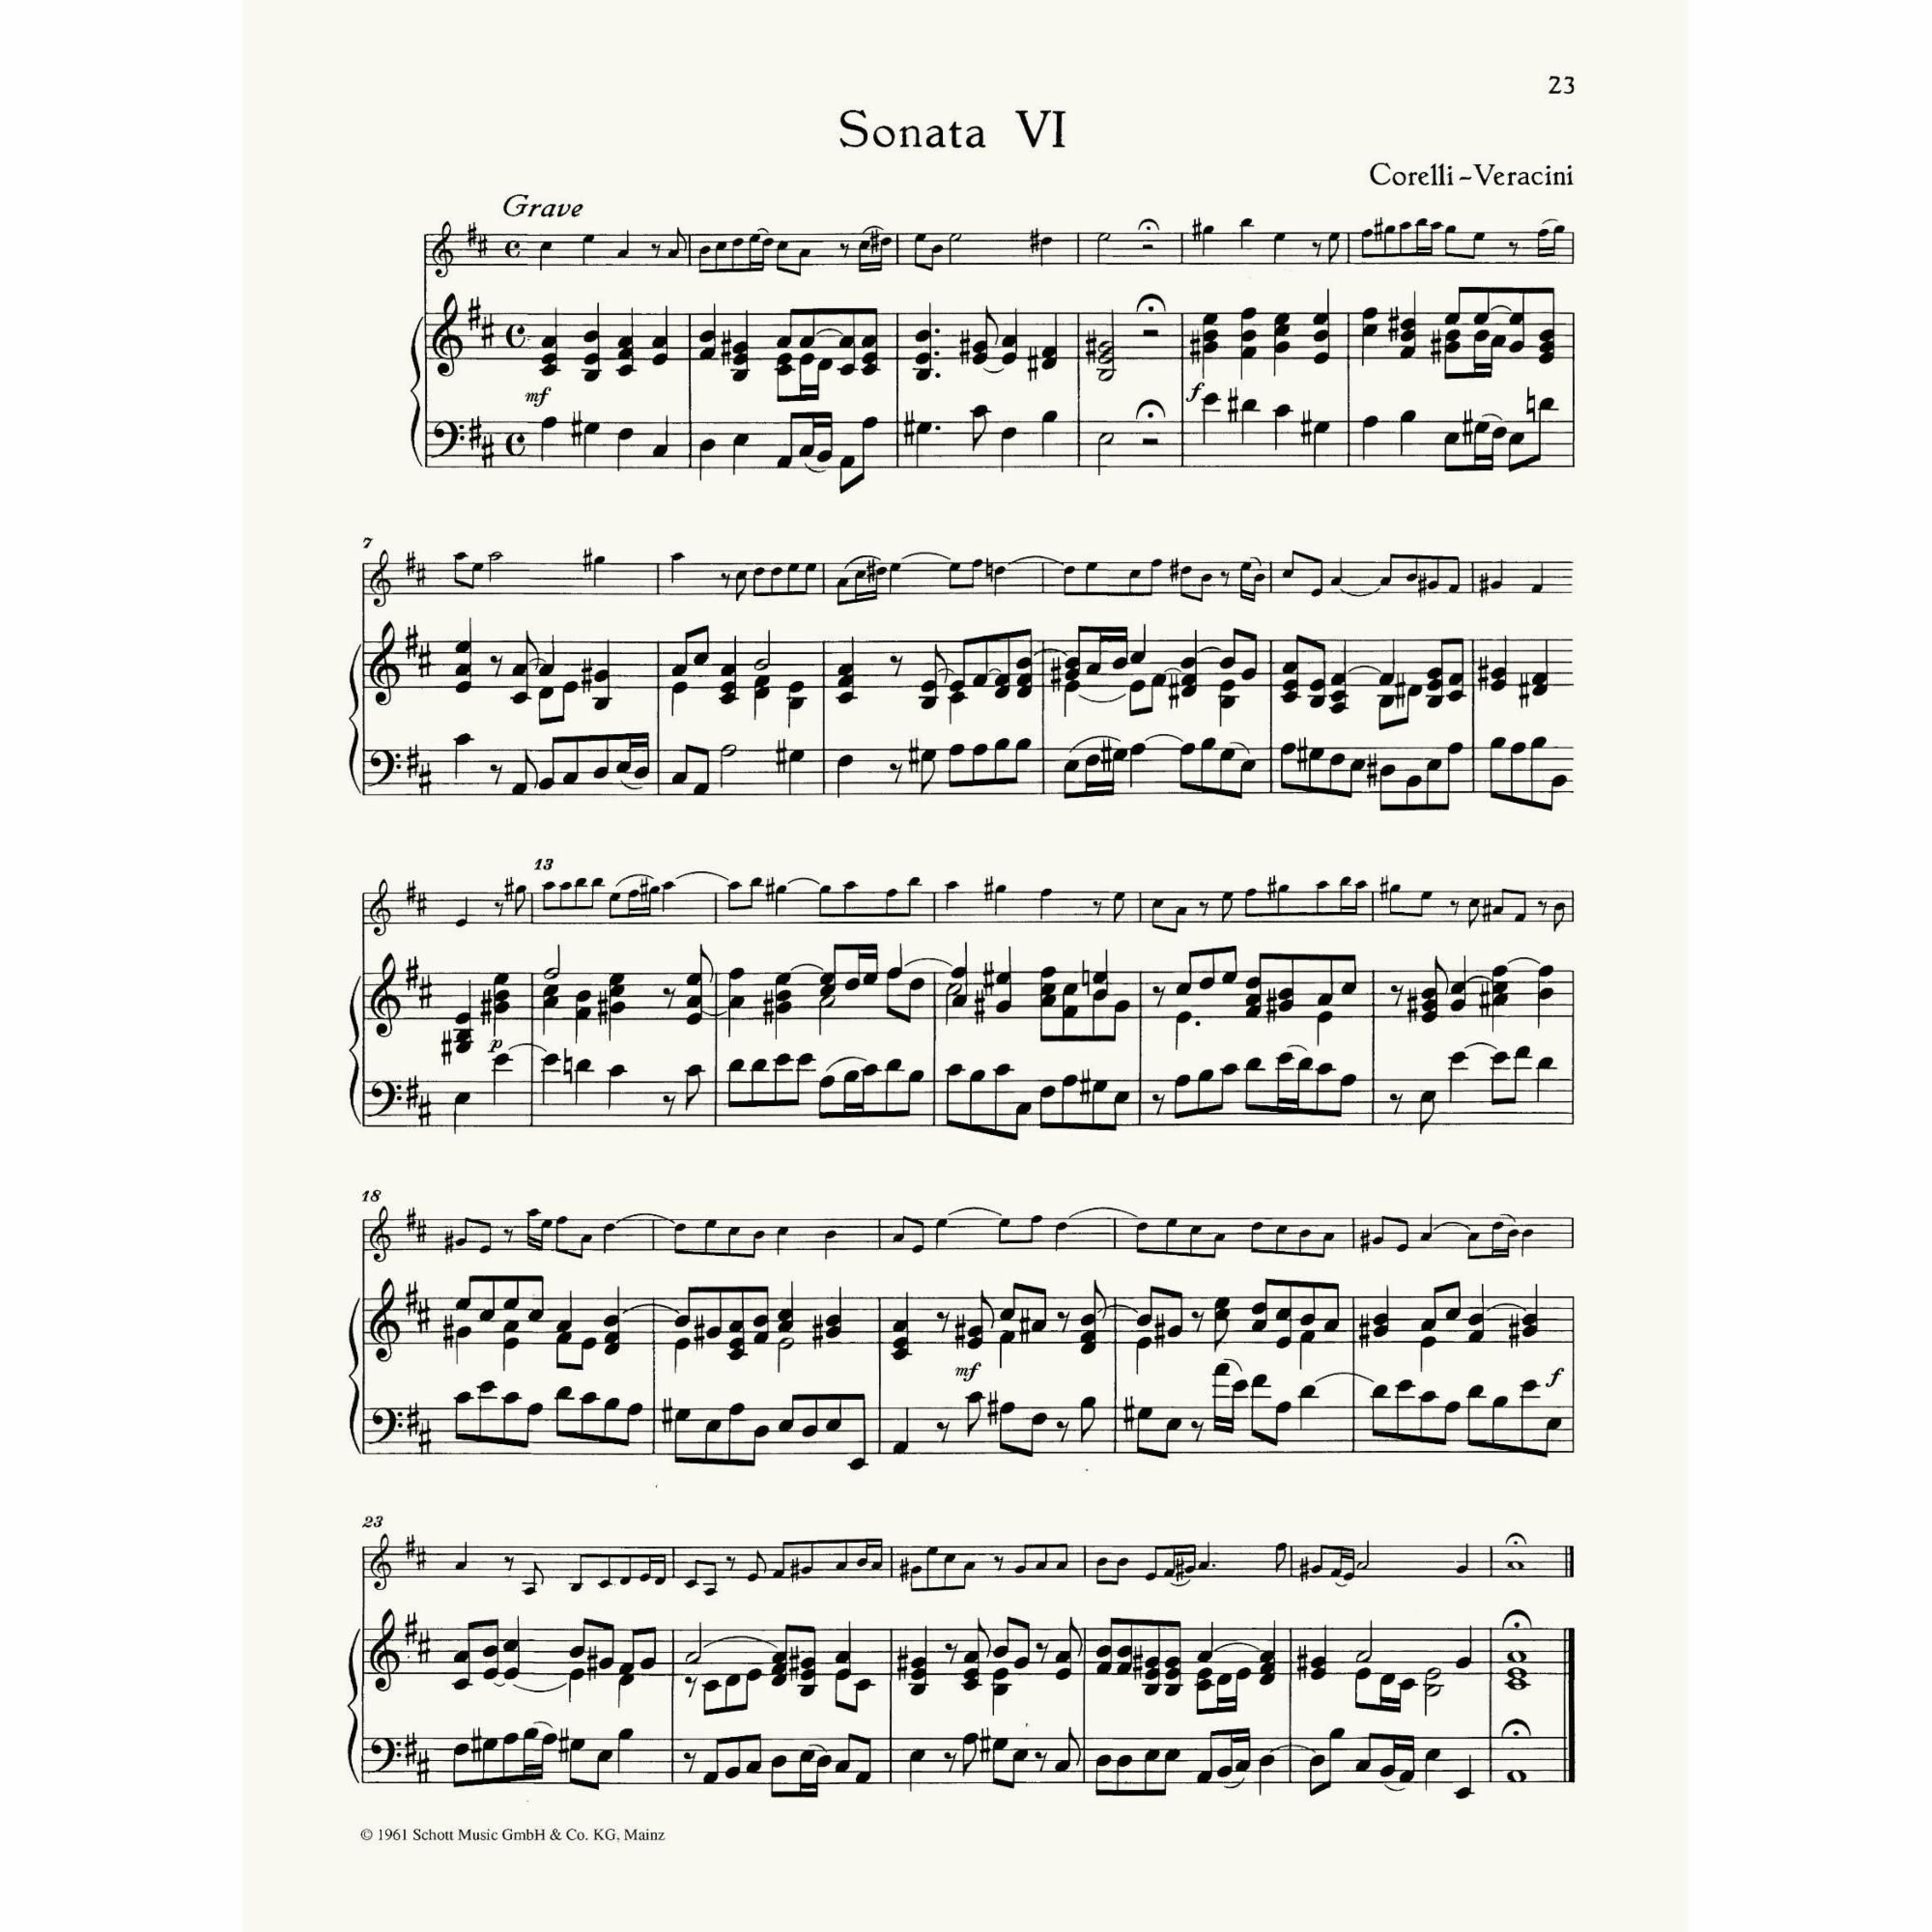 Sample: Vol. 2, Piano Part